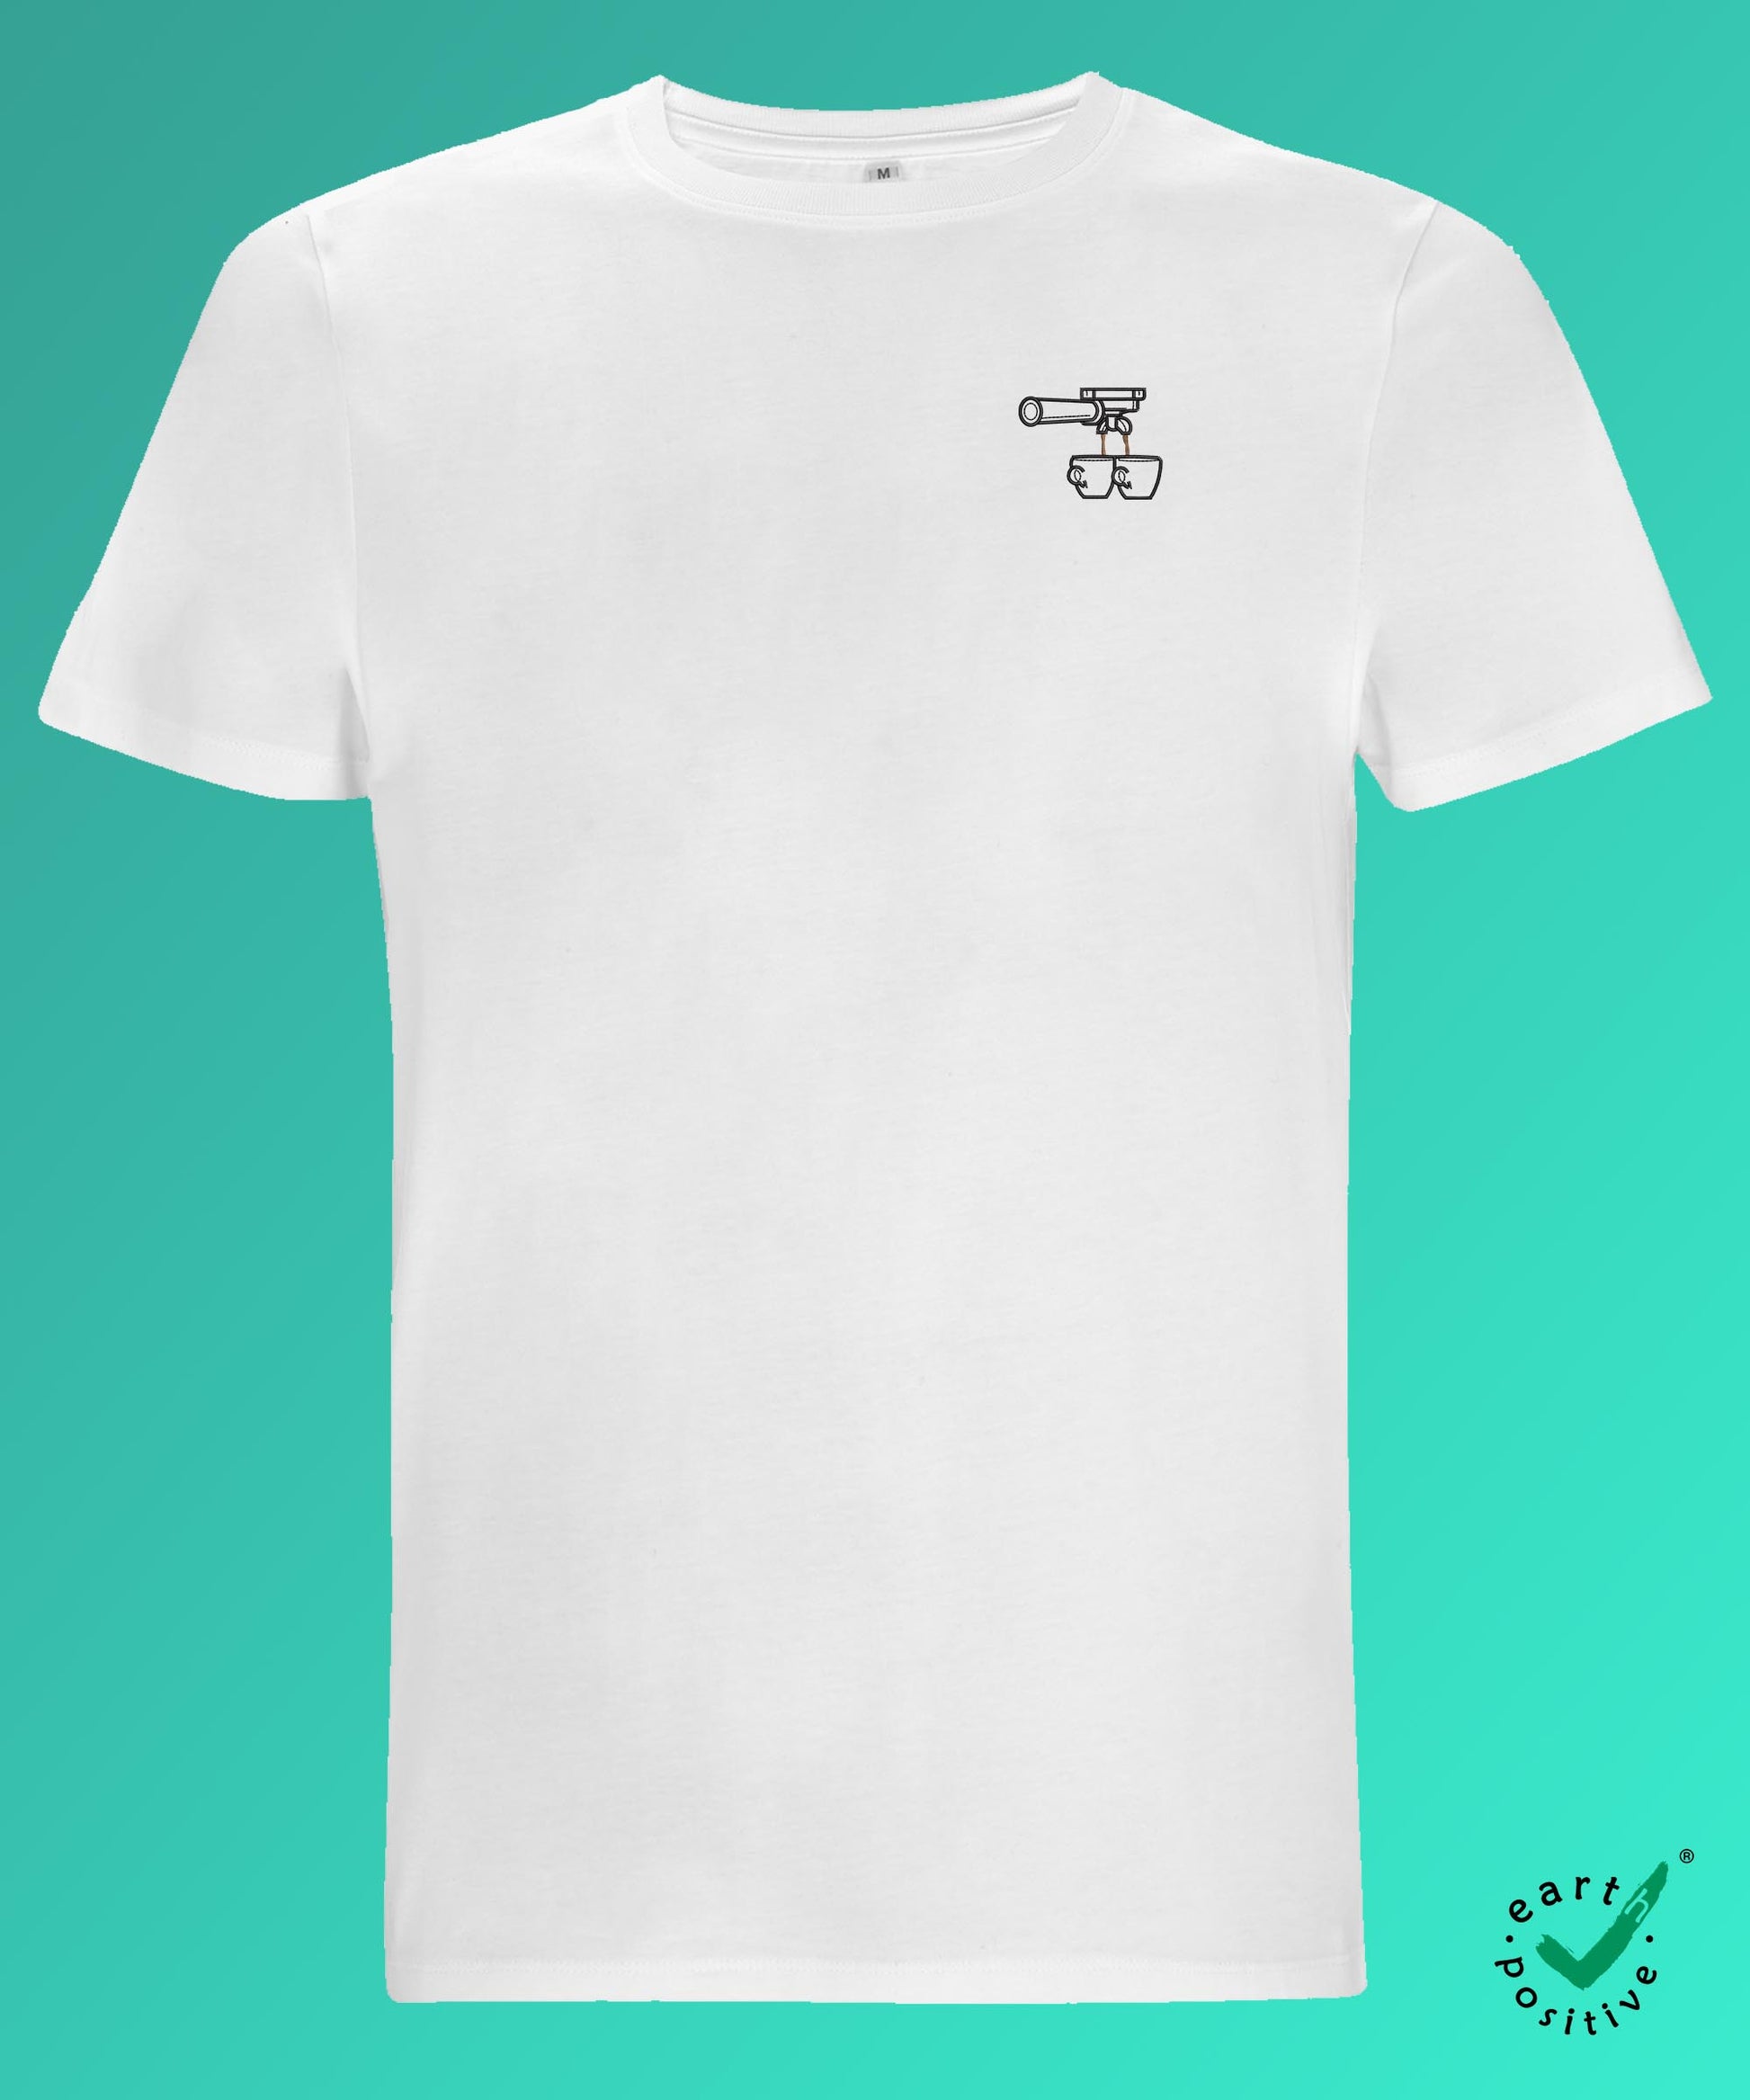 Ich kaufe ein A und möchte lösen  Kaffeetasse Weiß - Shirtee.de / Online  Custom T Shirts Design Maker & T Shirt Druck - Shirtee